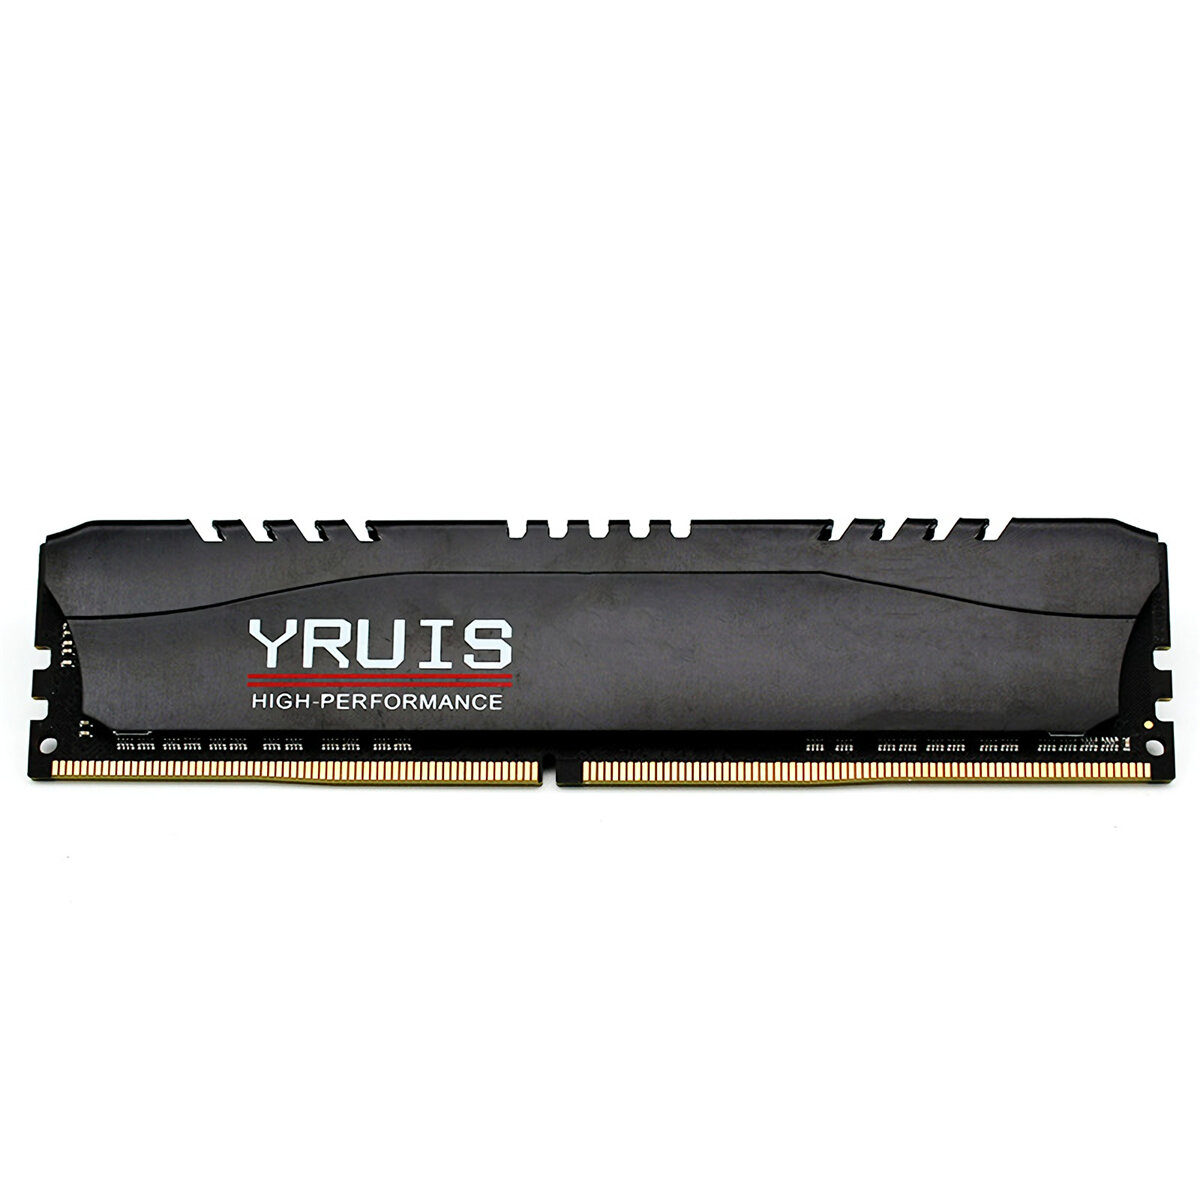 YRUIS DDR4 8G/16G 2400Mhz RAM Memory Stick Desktop Computer Memory Card for Desktop Computer PC